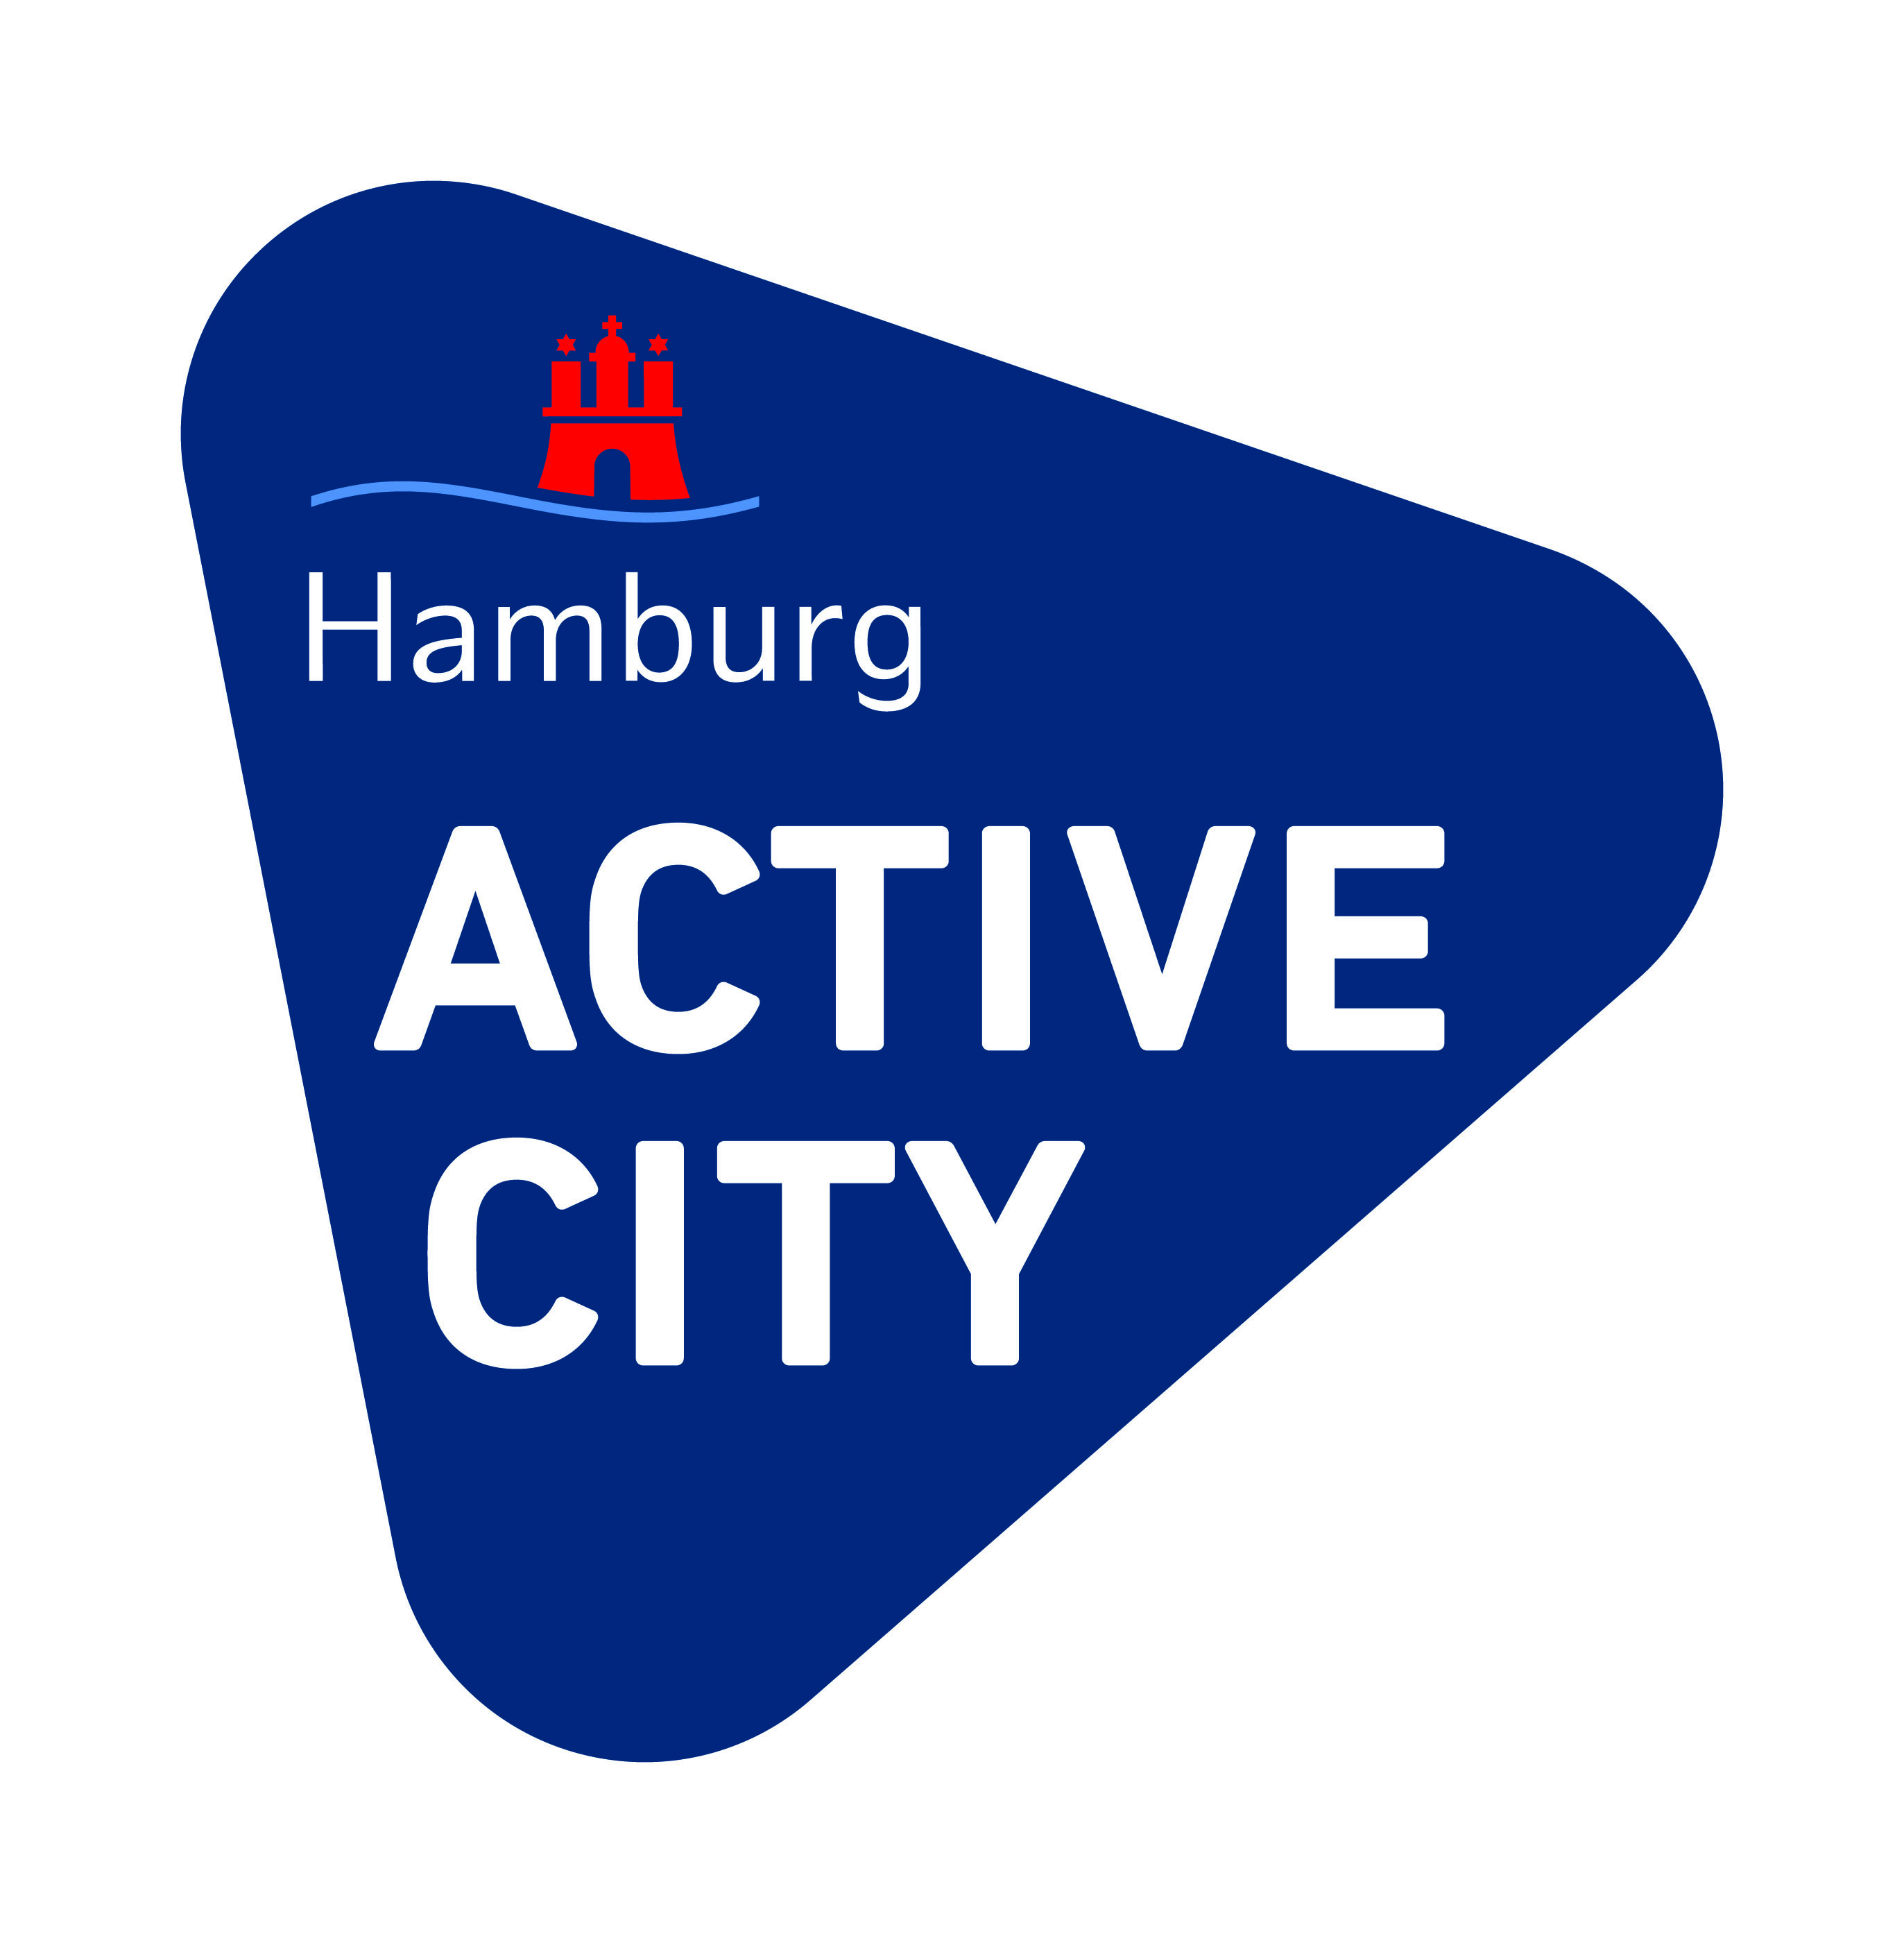 Hamburg activ city_freigestellt.jpg